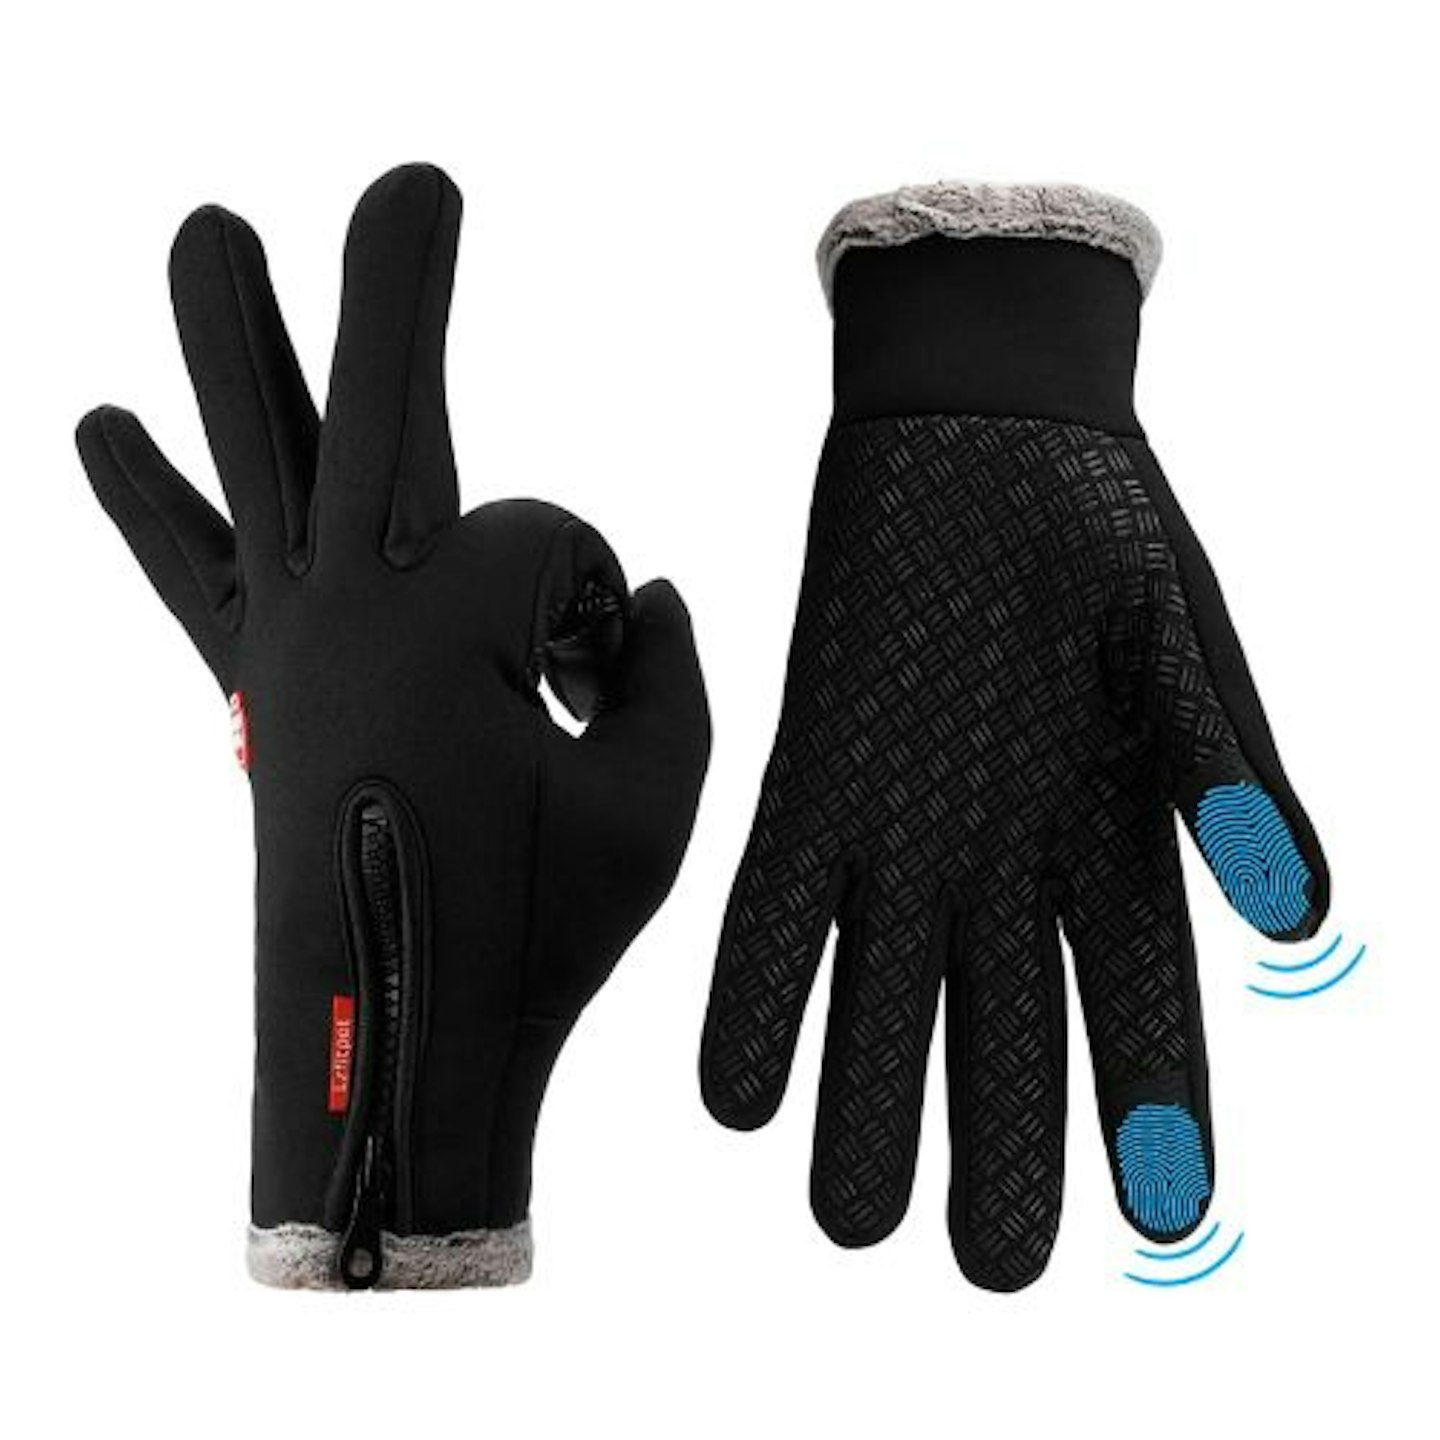 Lzfitpot Winter Warm Gloves